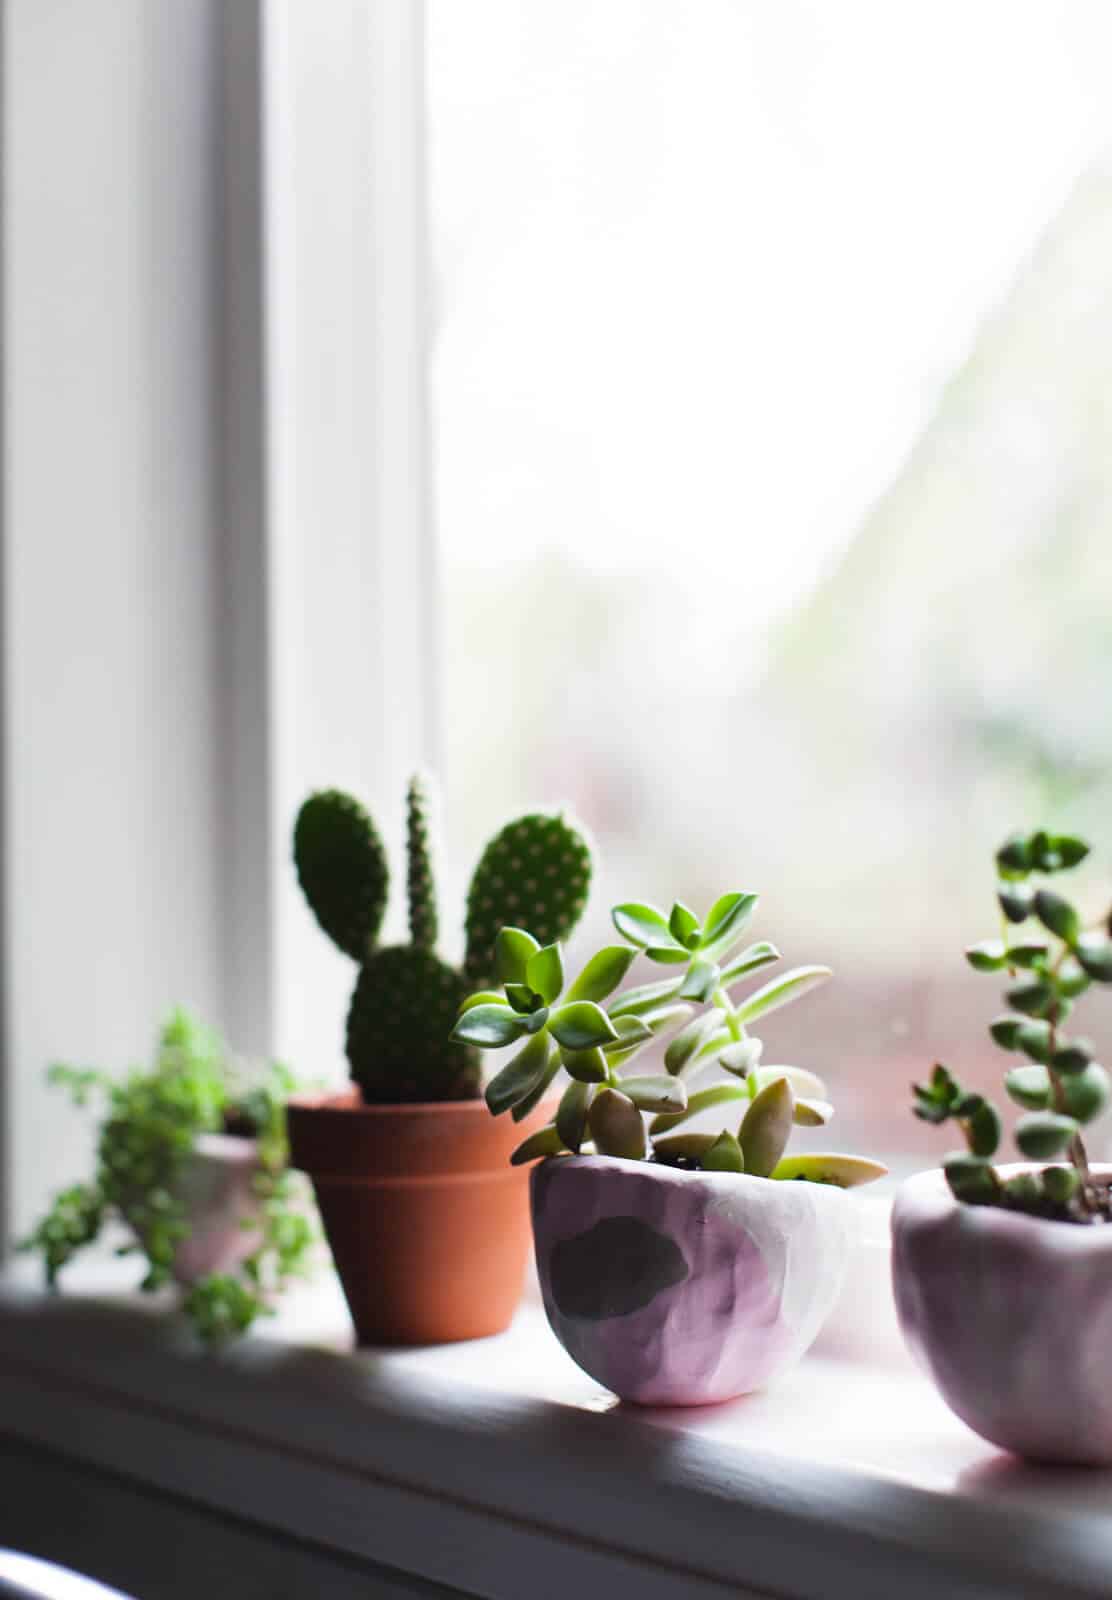 DIY Mini Pinch Pot Planters - A Beautiful Mess